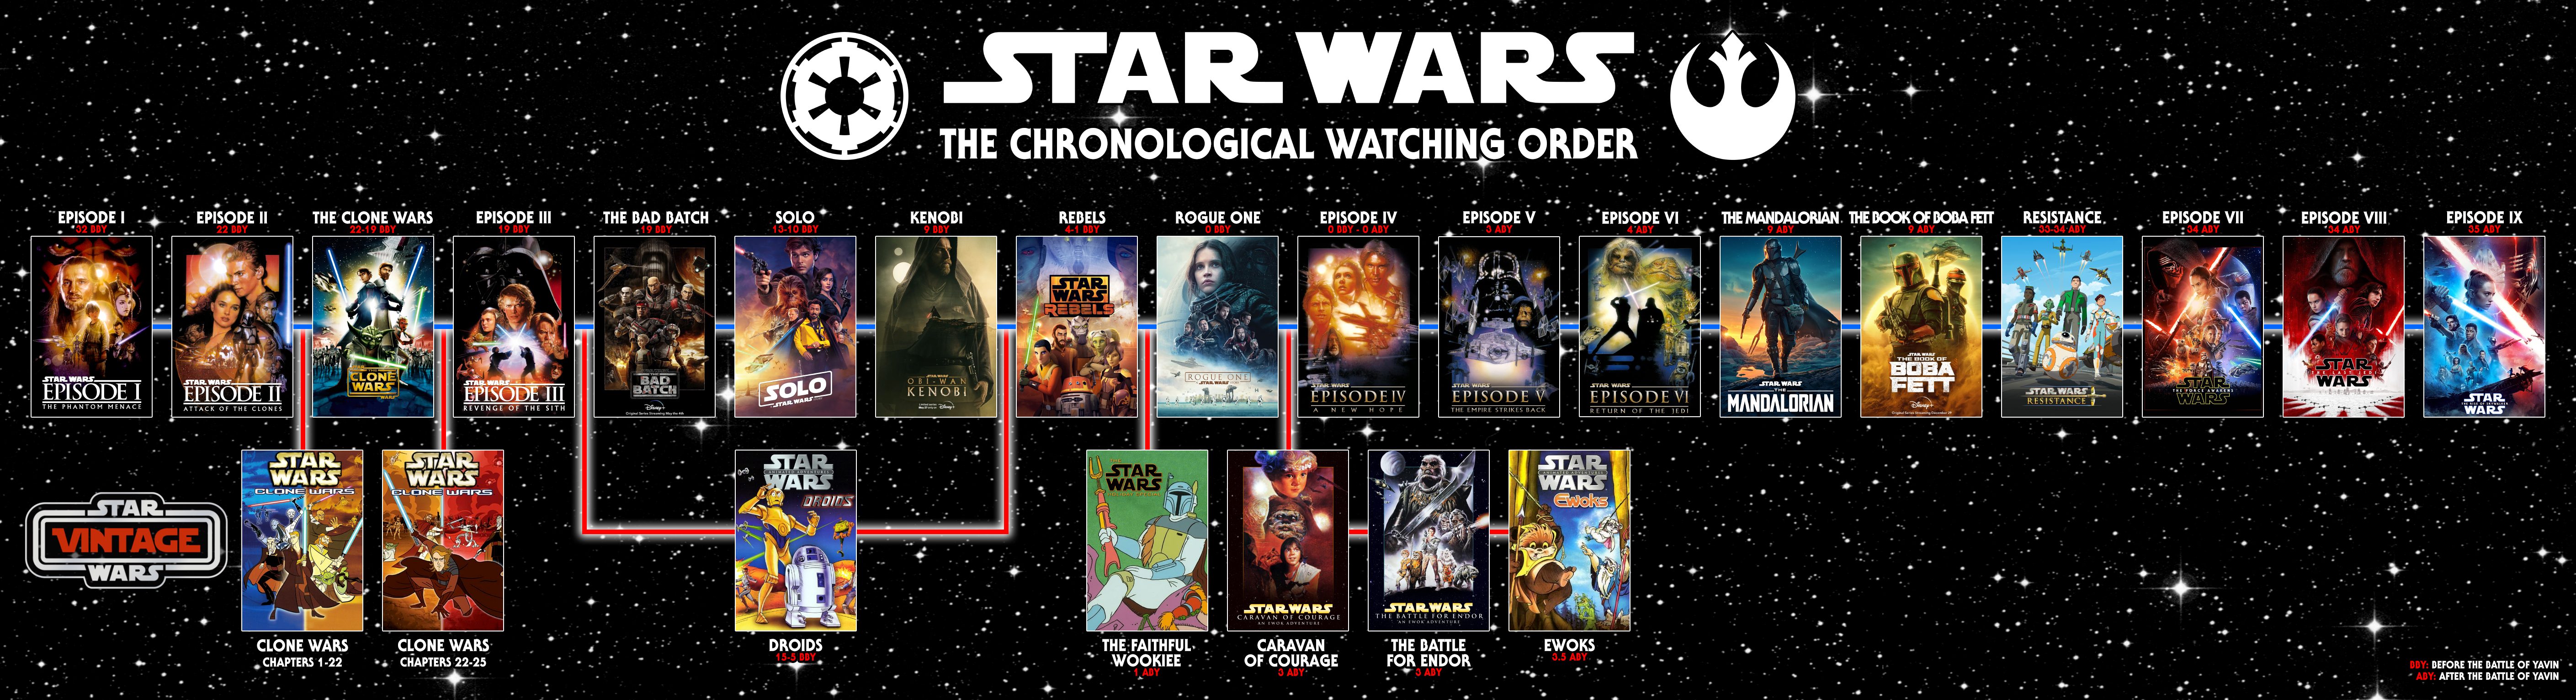 Timeline - Star Wars Chronological Watching Order by Morsoth on DeviantArt